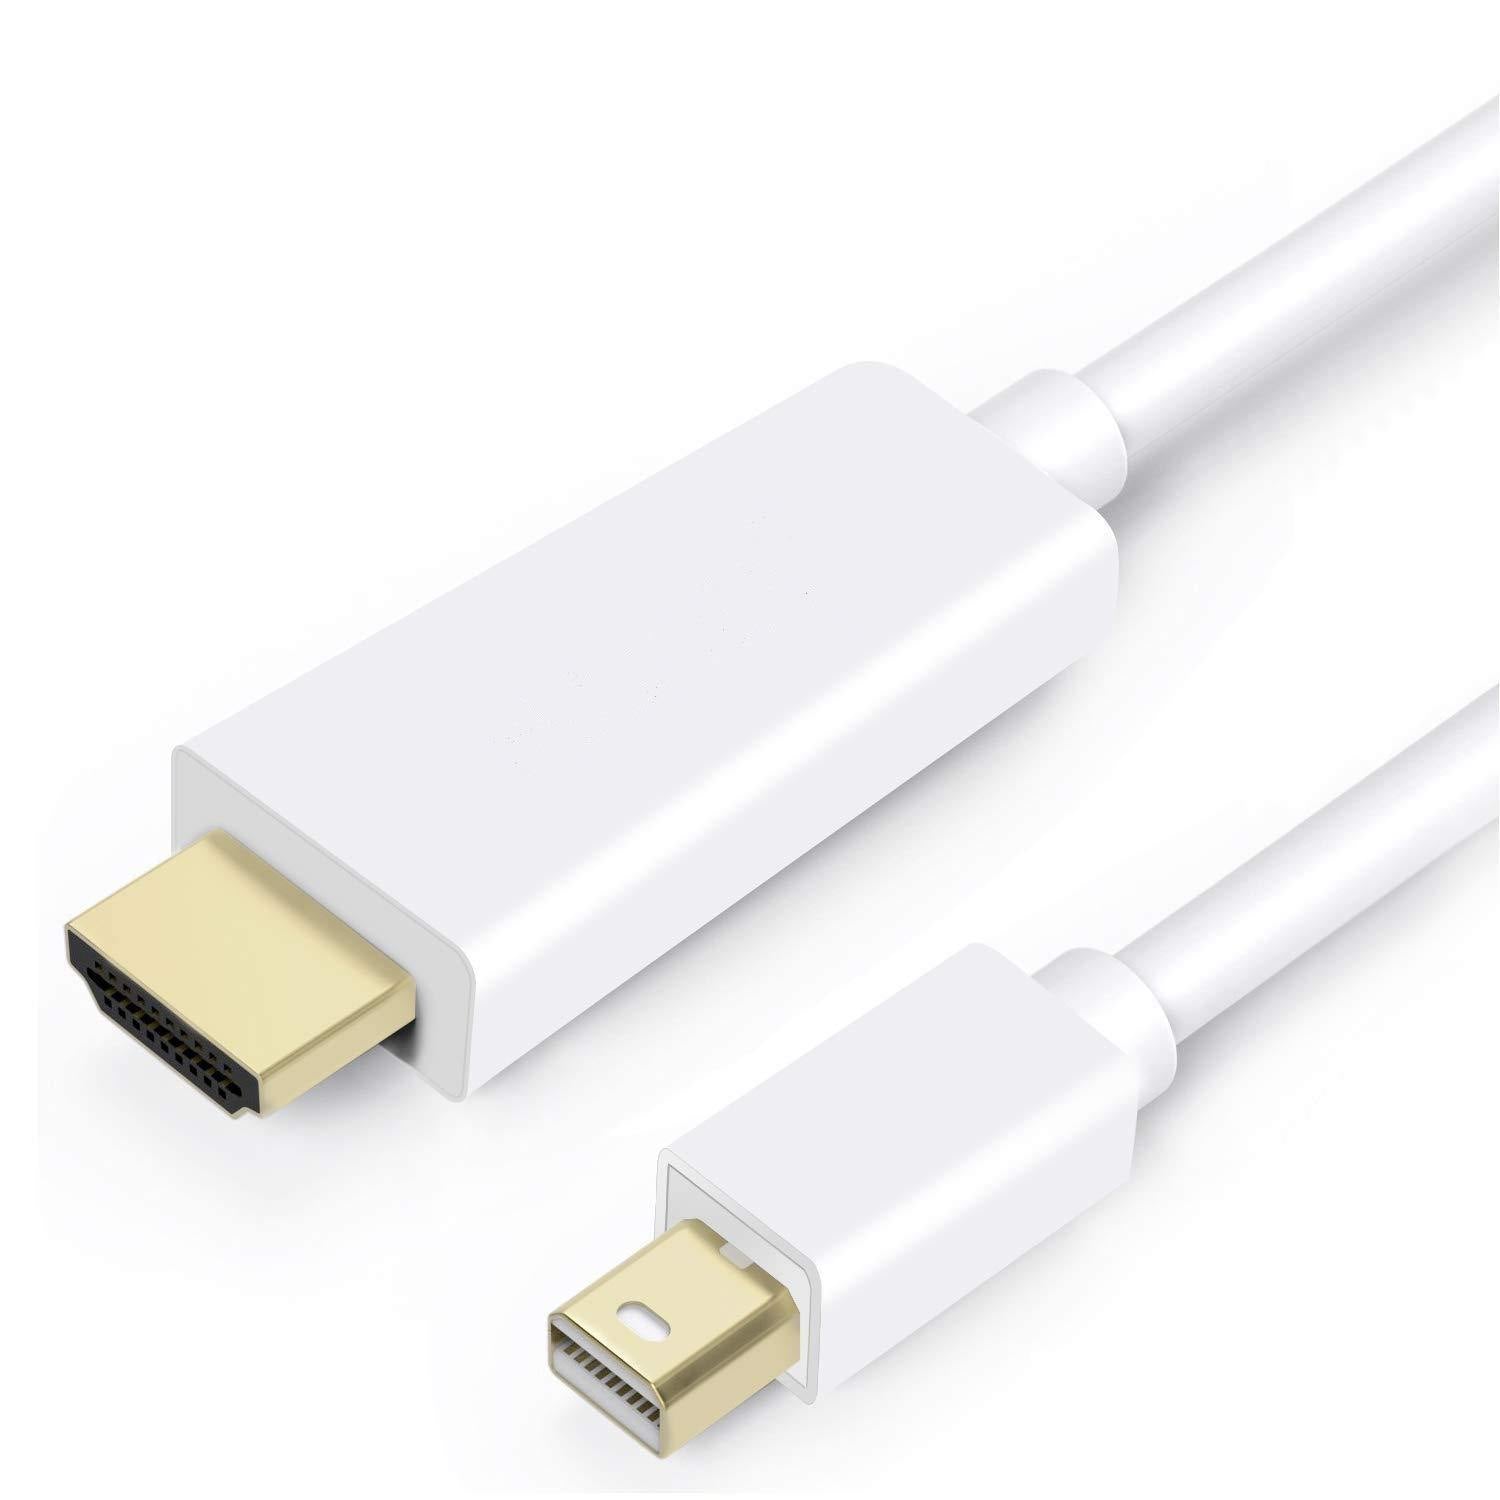 Mini DP to HDMI Cable, Mini Displayport Thunderbolt to HDMI Cable (1.8 Metre / 6 feet), White - iFyx